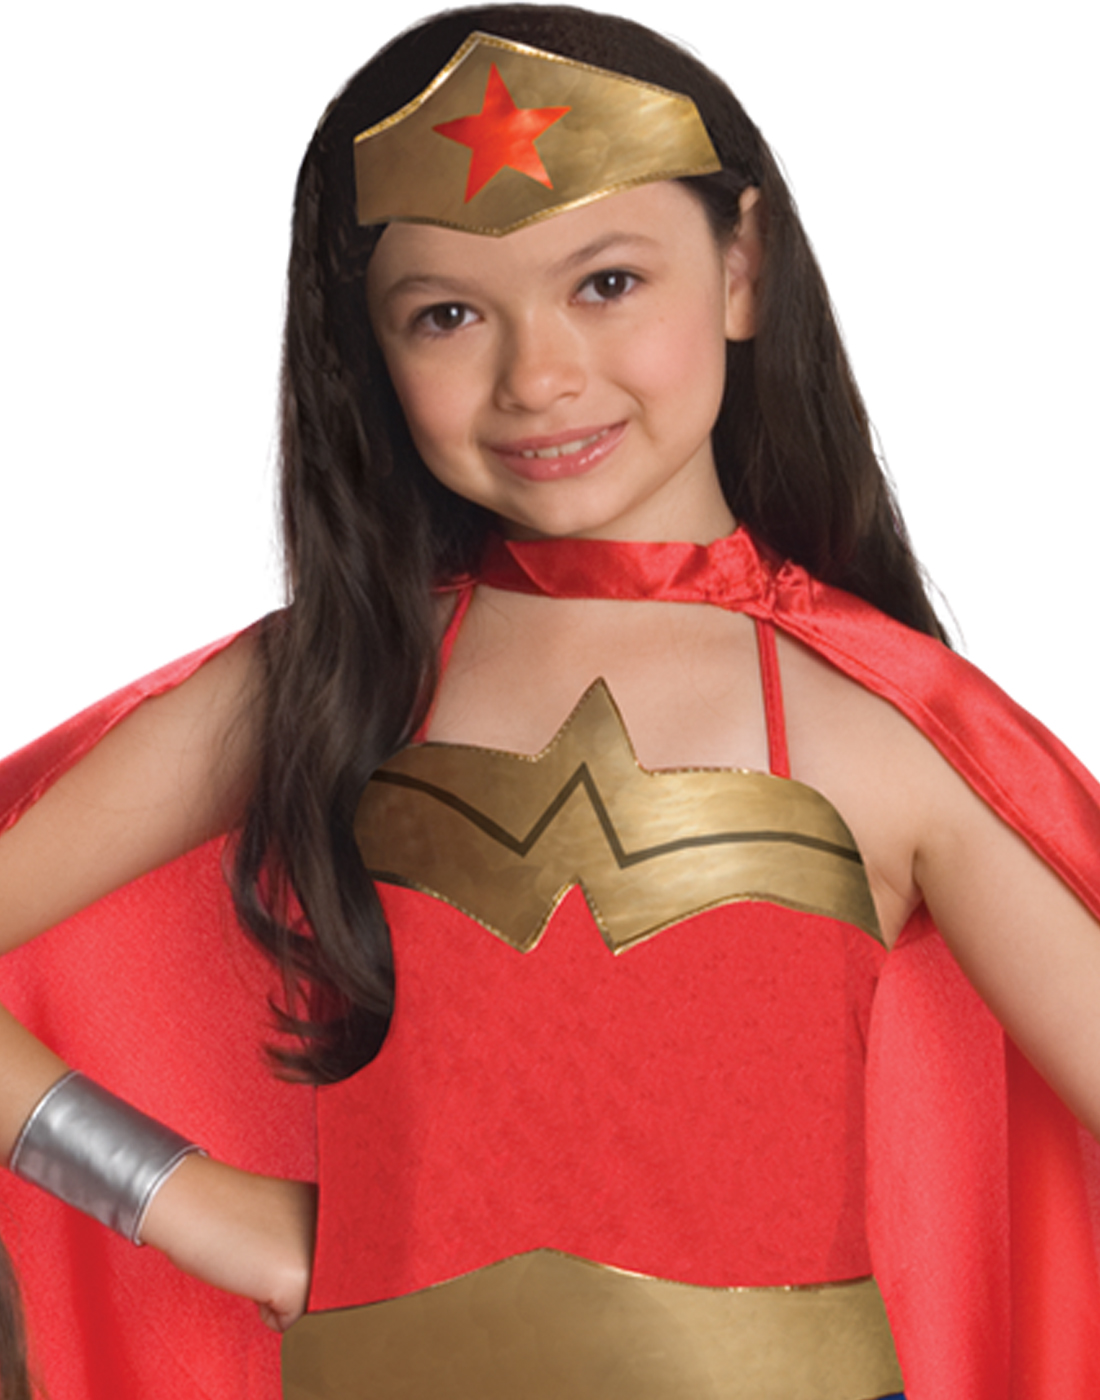 Justice League DC Comics Wonder Woman Child Halloween Costume - image 4 of 4